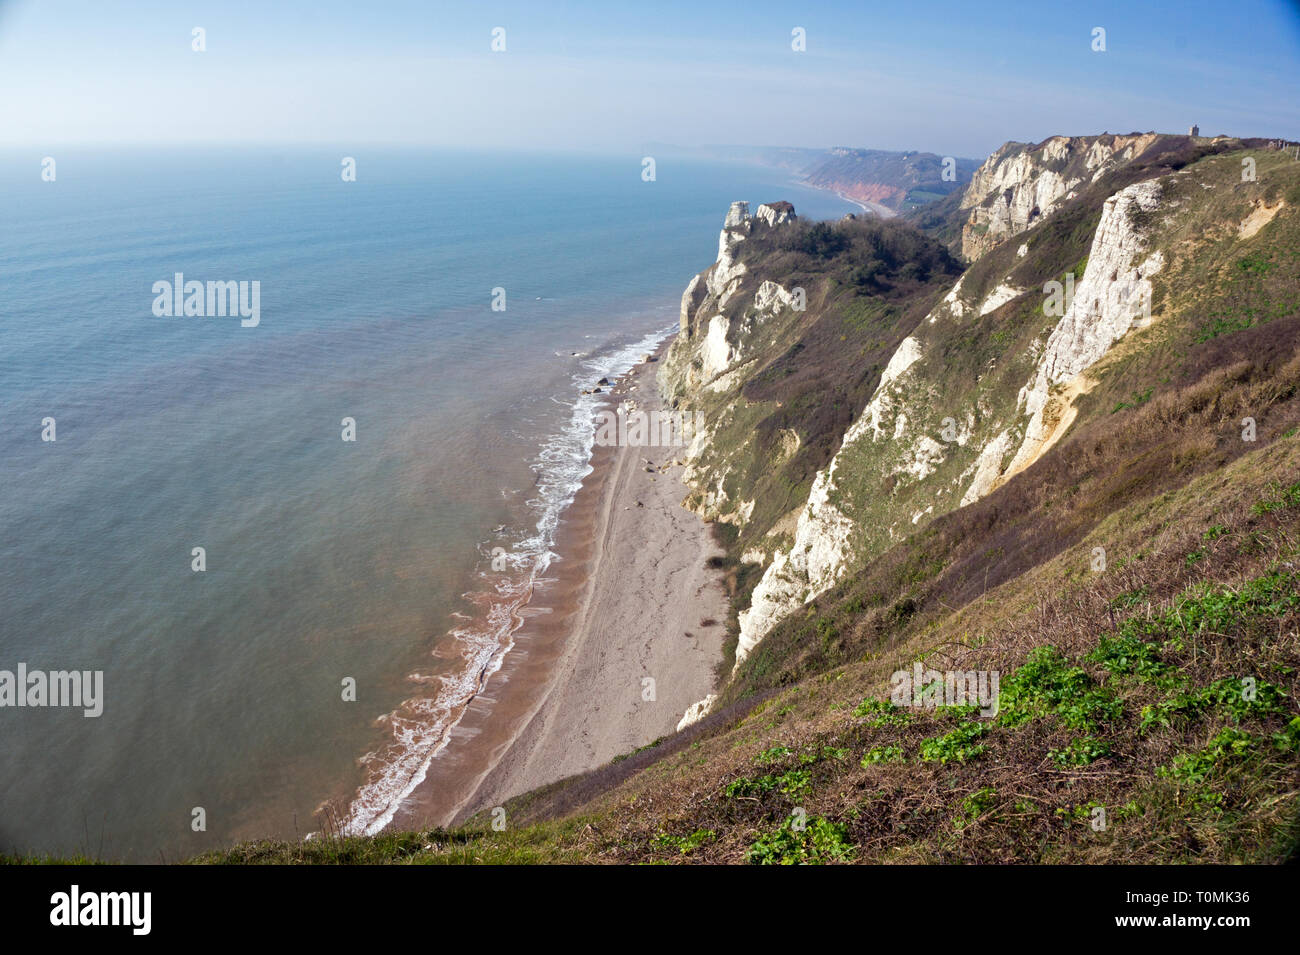 Scenic view of Jurassic Coast chalk cliffs and beach, Beer, East Devon Coast, England Stock Photo